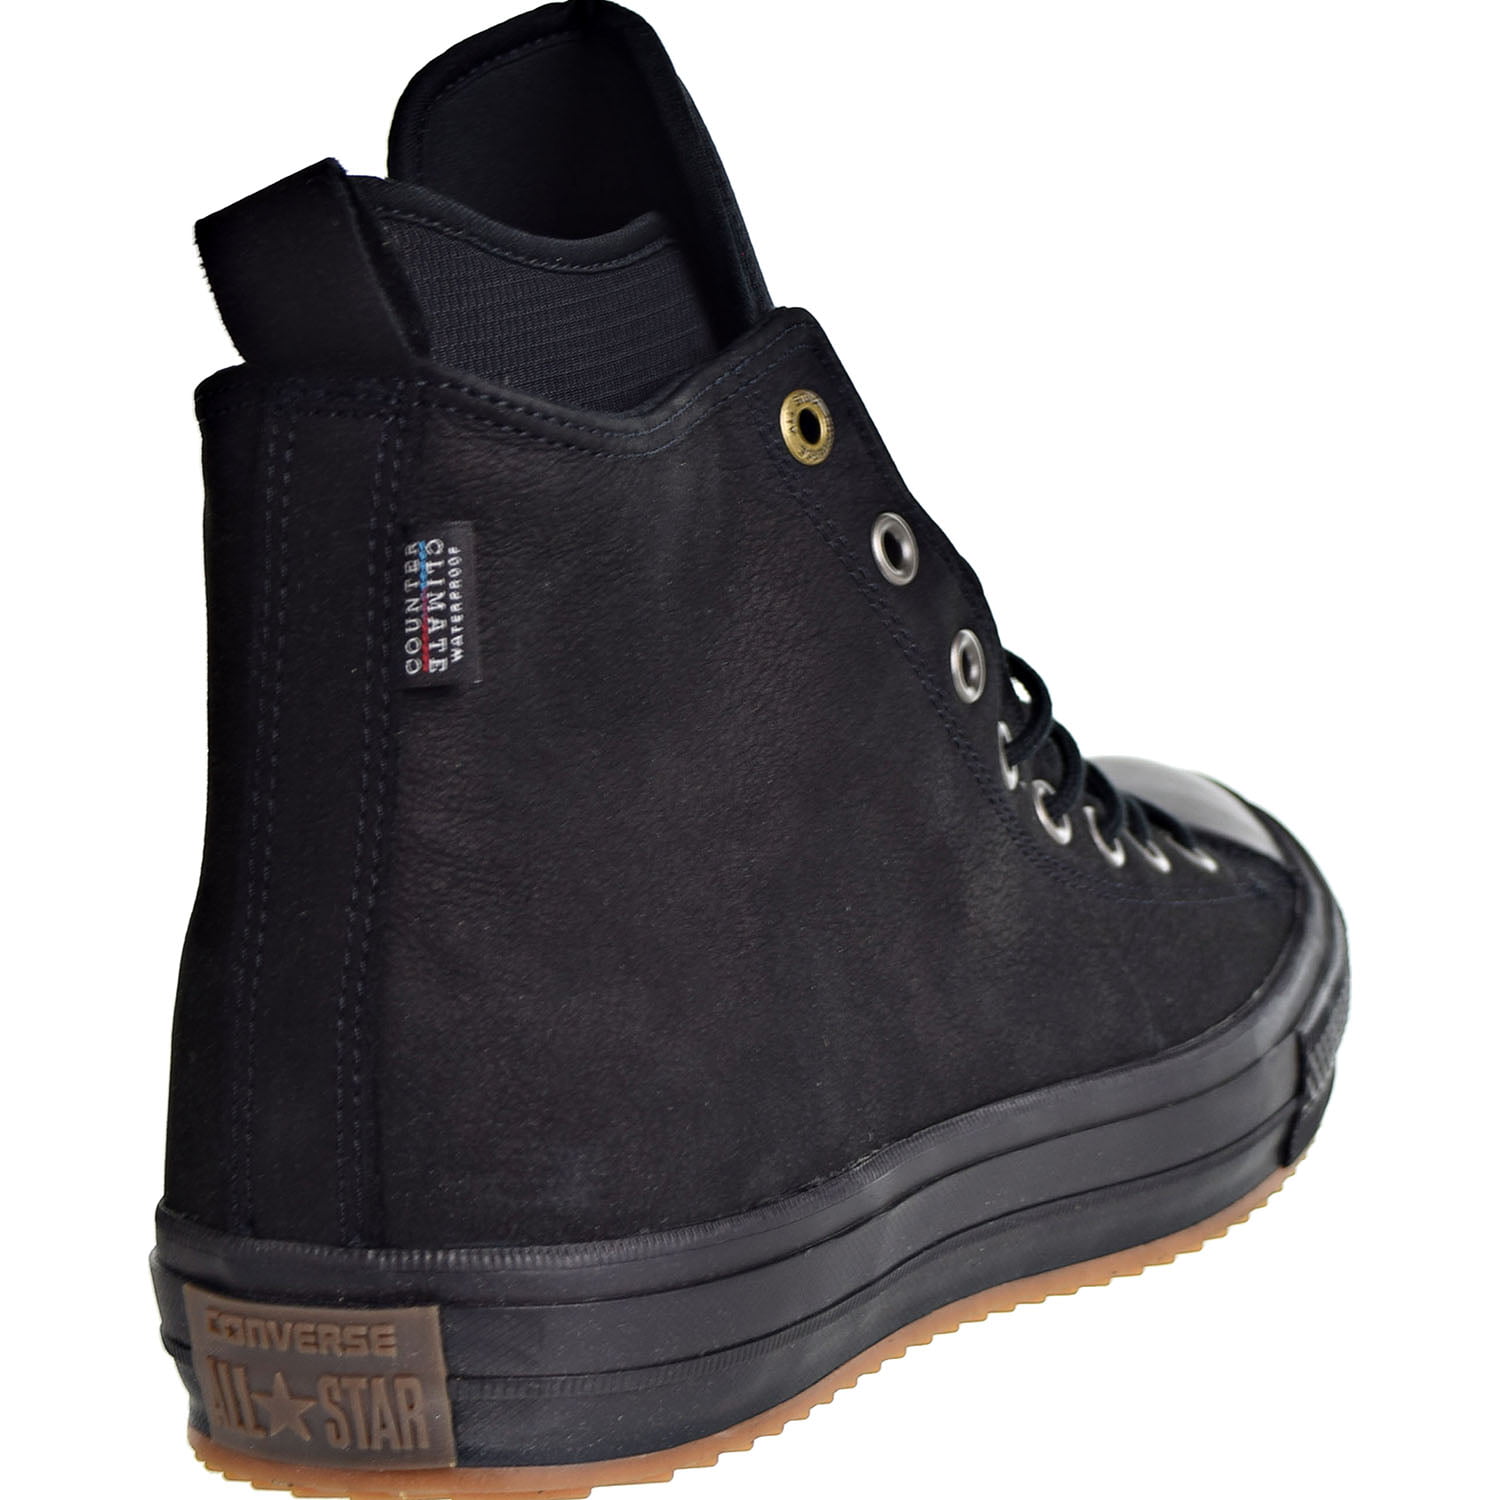 converse men's chuck taylor waterproof hi boots